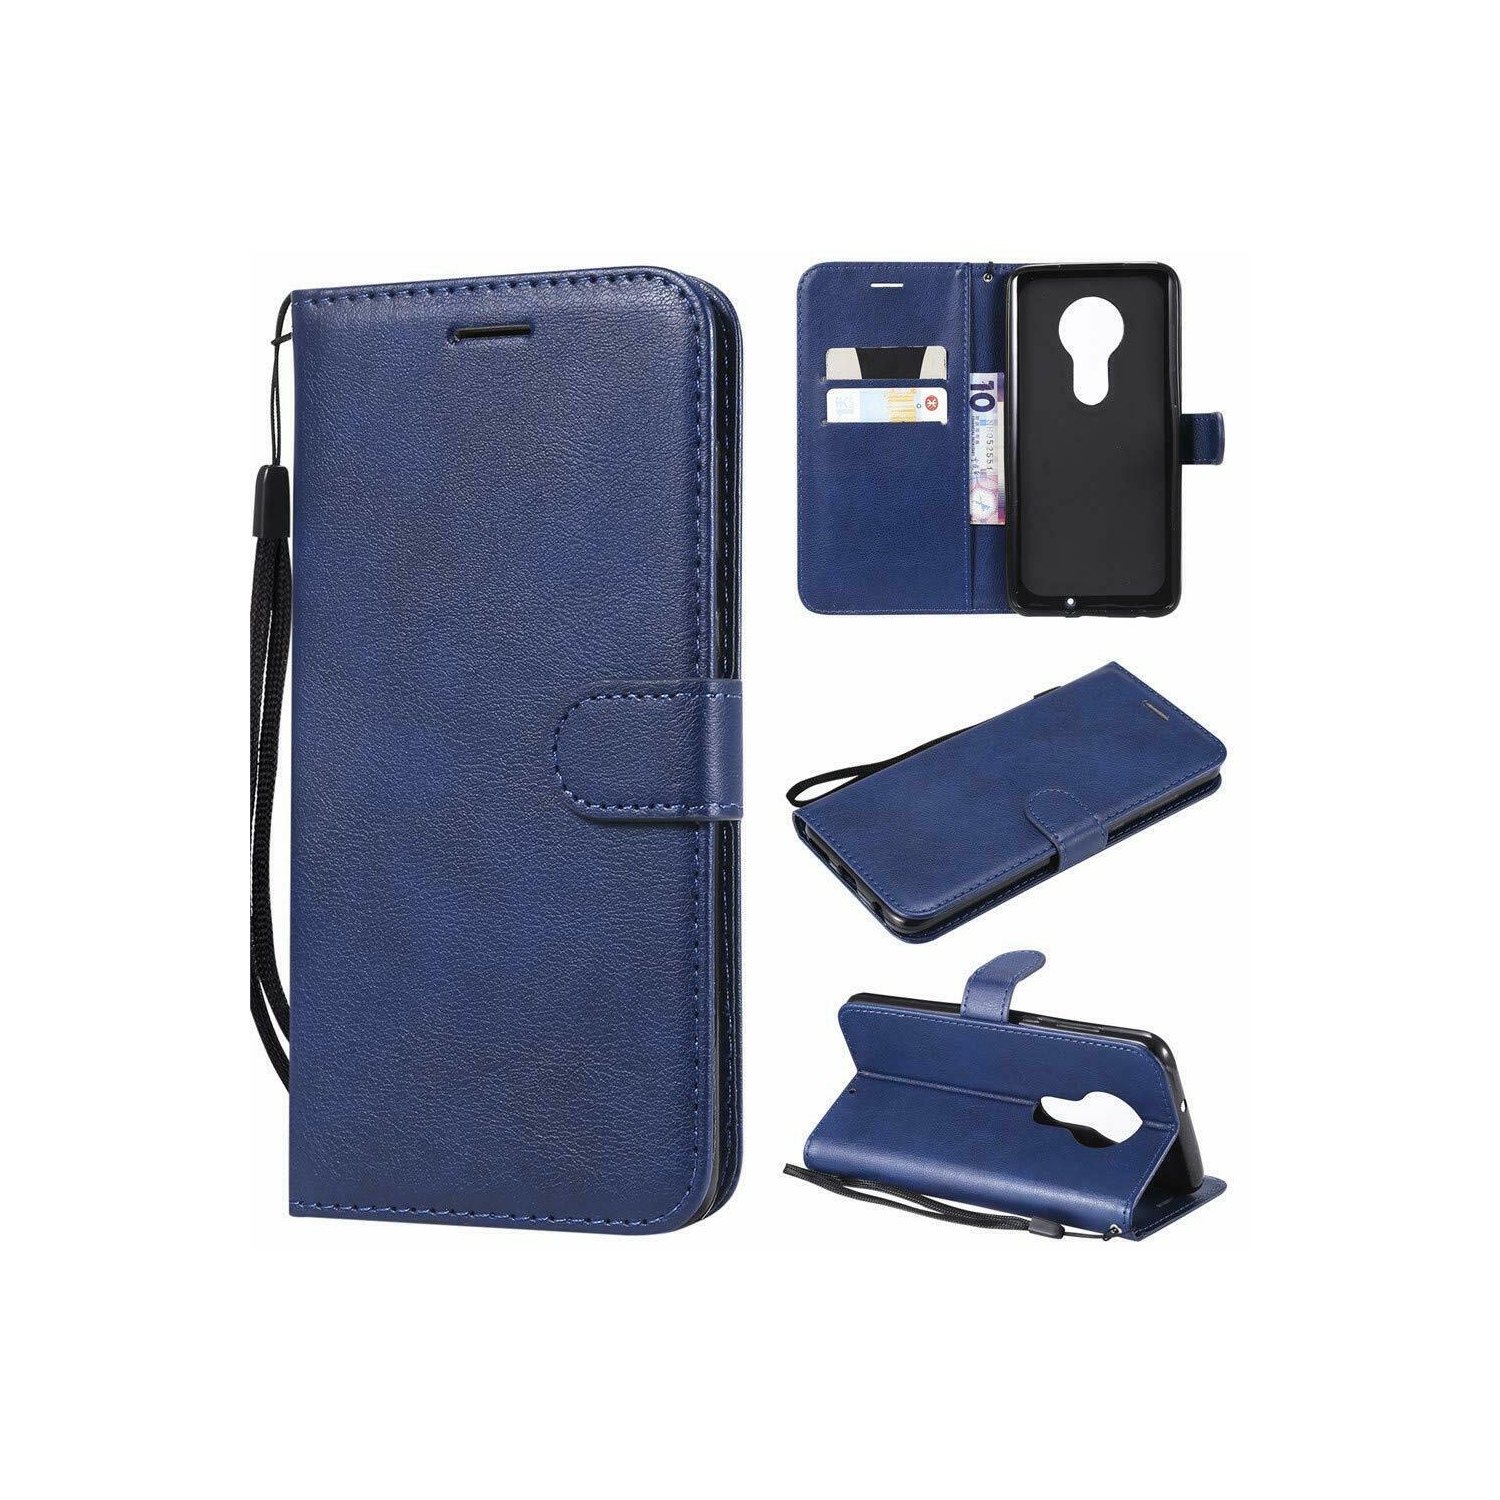 [CS] Motorola Moto G7 Power Case, Magnetic Leather Folio Wallet Flip Case Cover with Card Slot, Navy